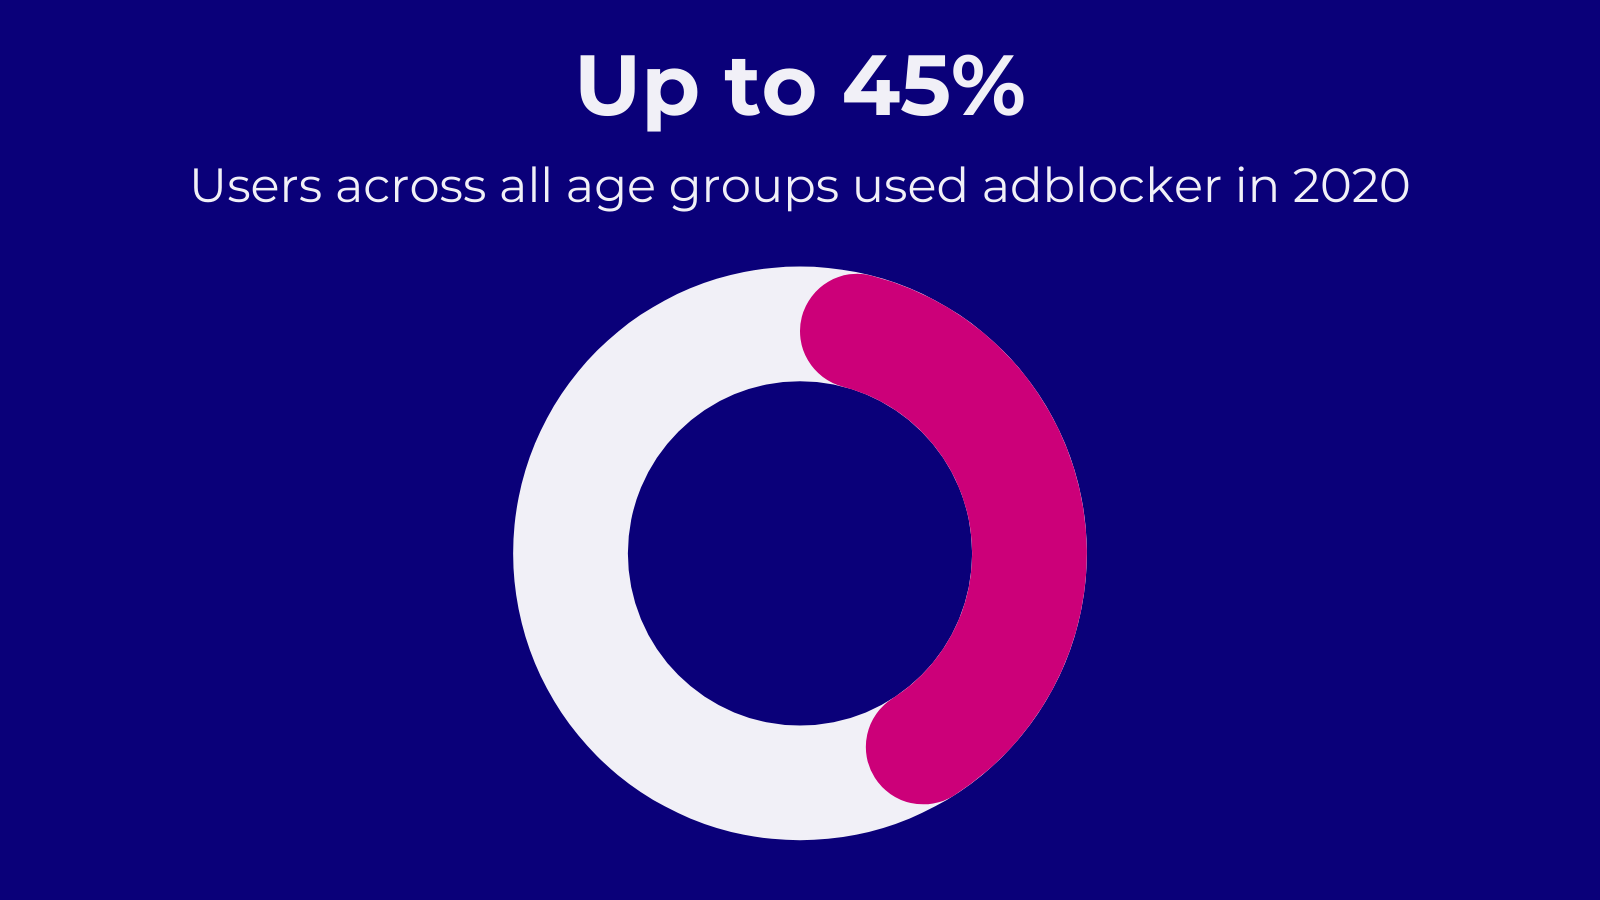 Adblocker by age.png